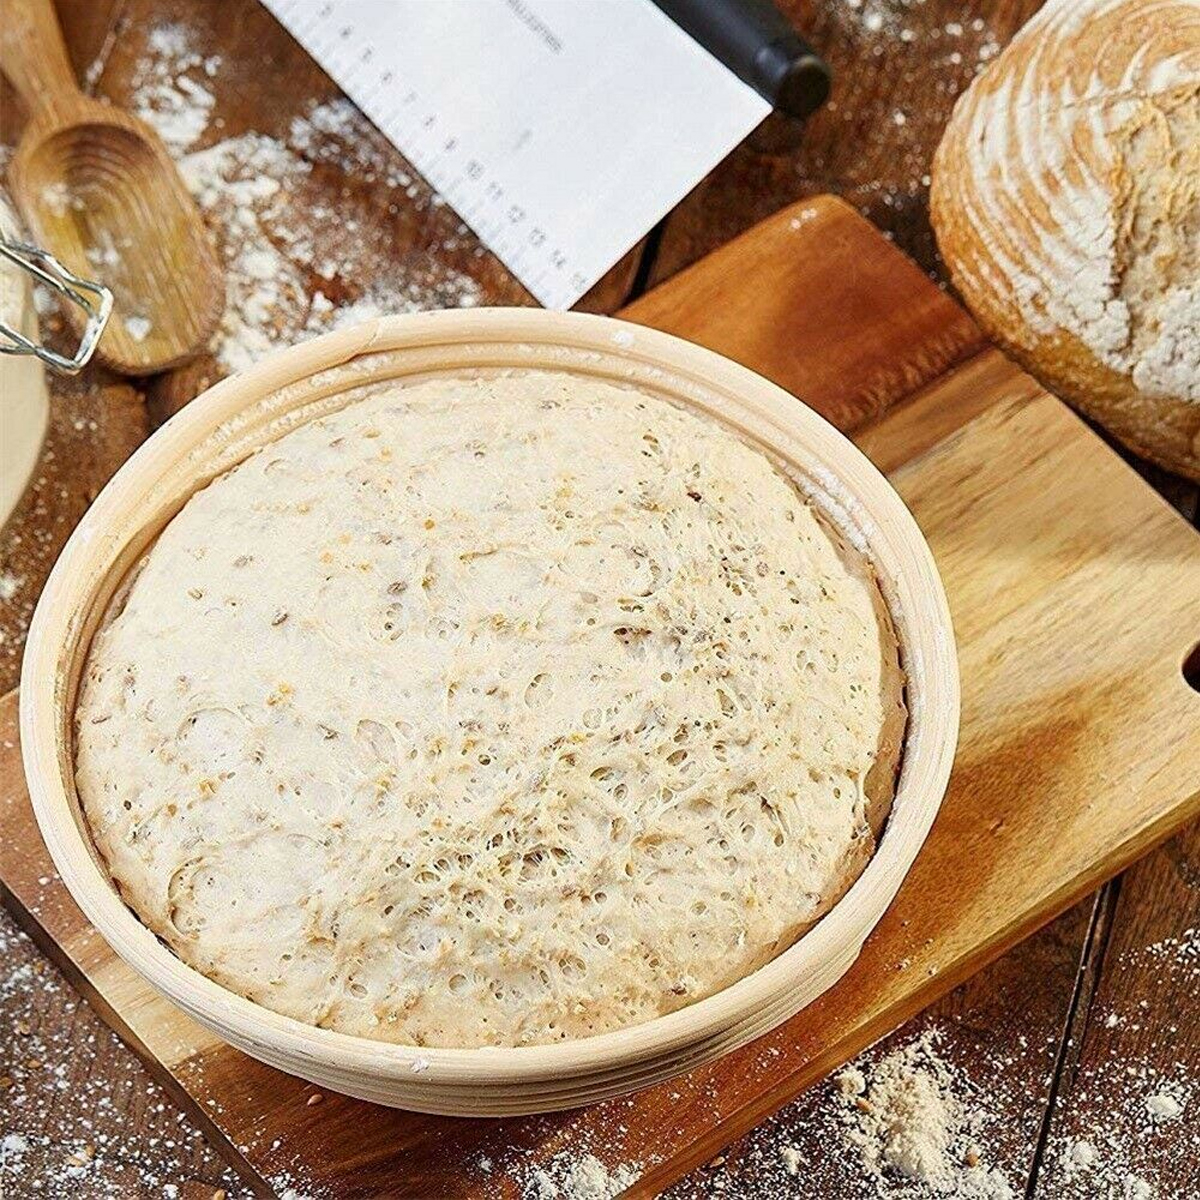 25cm-Round-Bread-Proofing-Basket-Sourdough-Proving-Banneton-Beginner-Baking-Tool-1741907-6